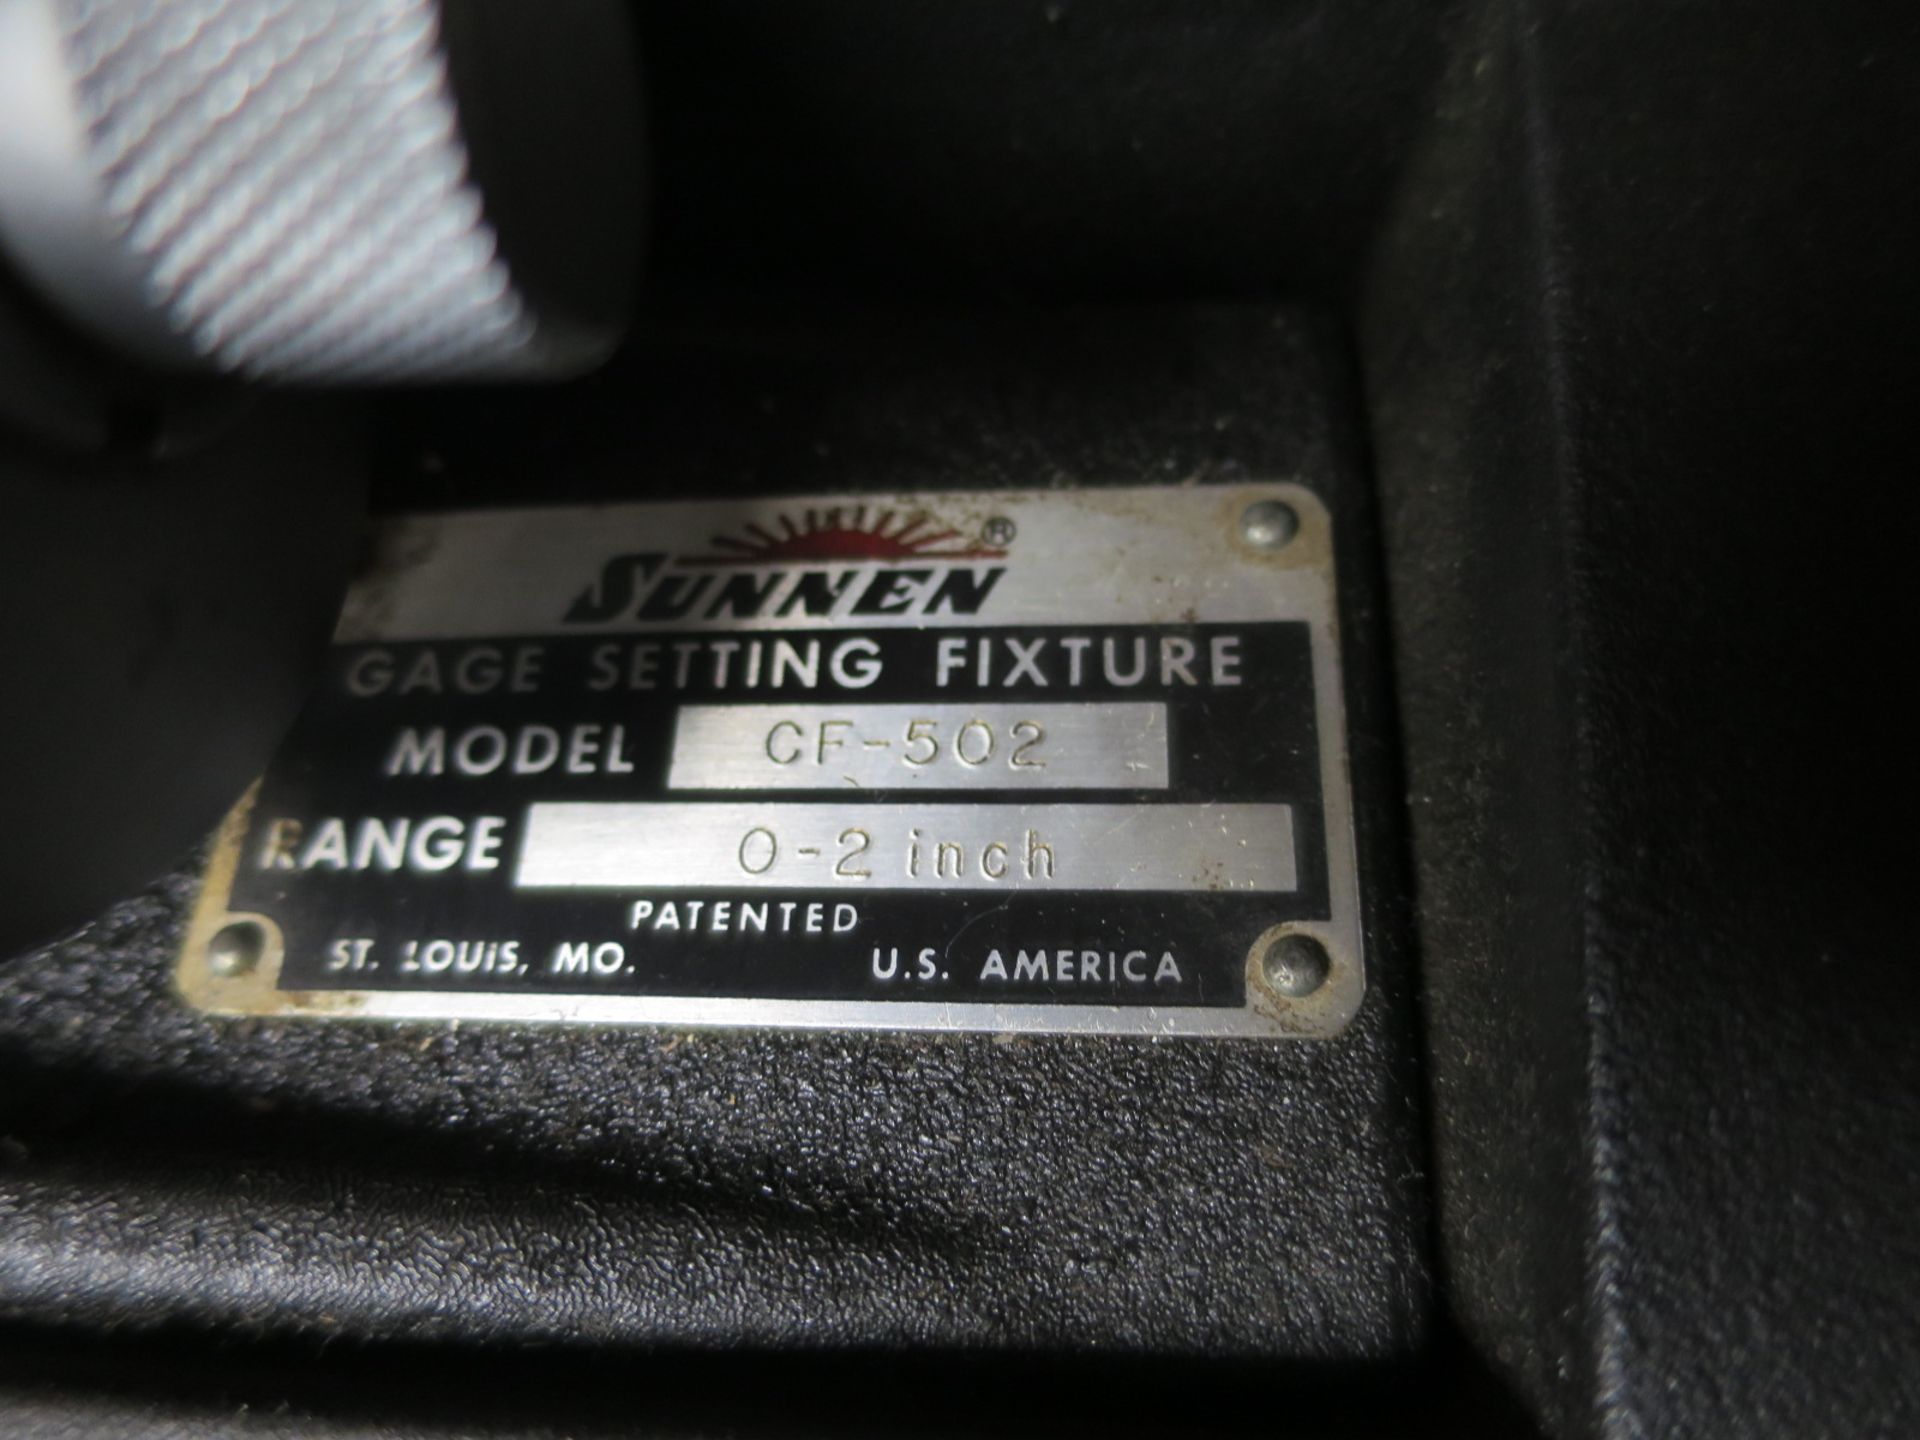 Sunnen Gage Setting Fixture Model CF-502 - Image 2 of 2